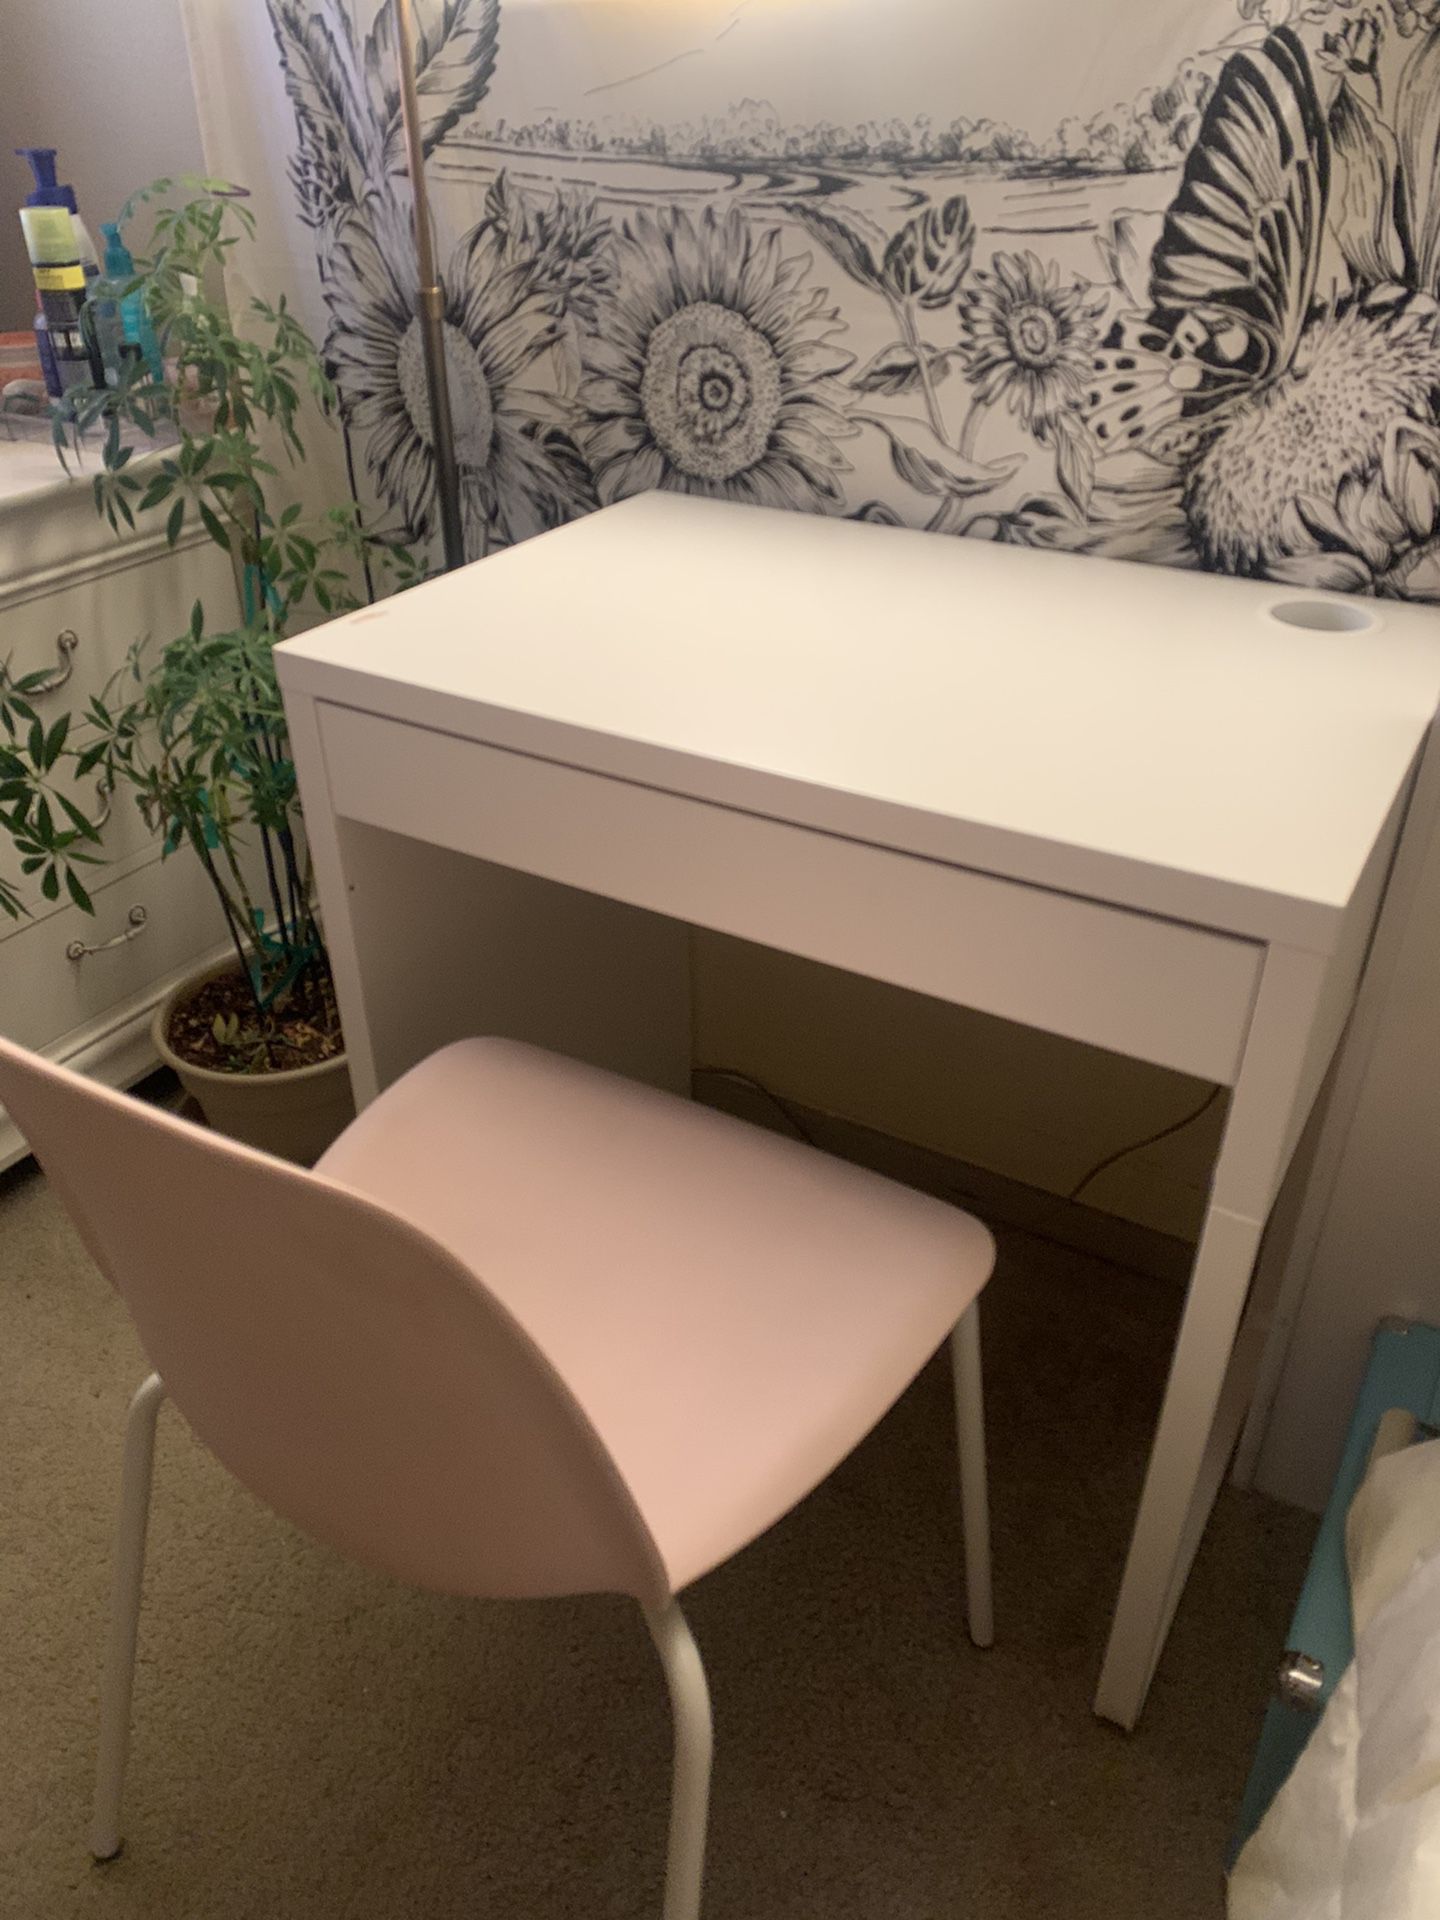 Ikea Micke Desk and Chair